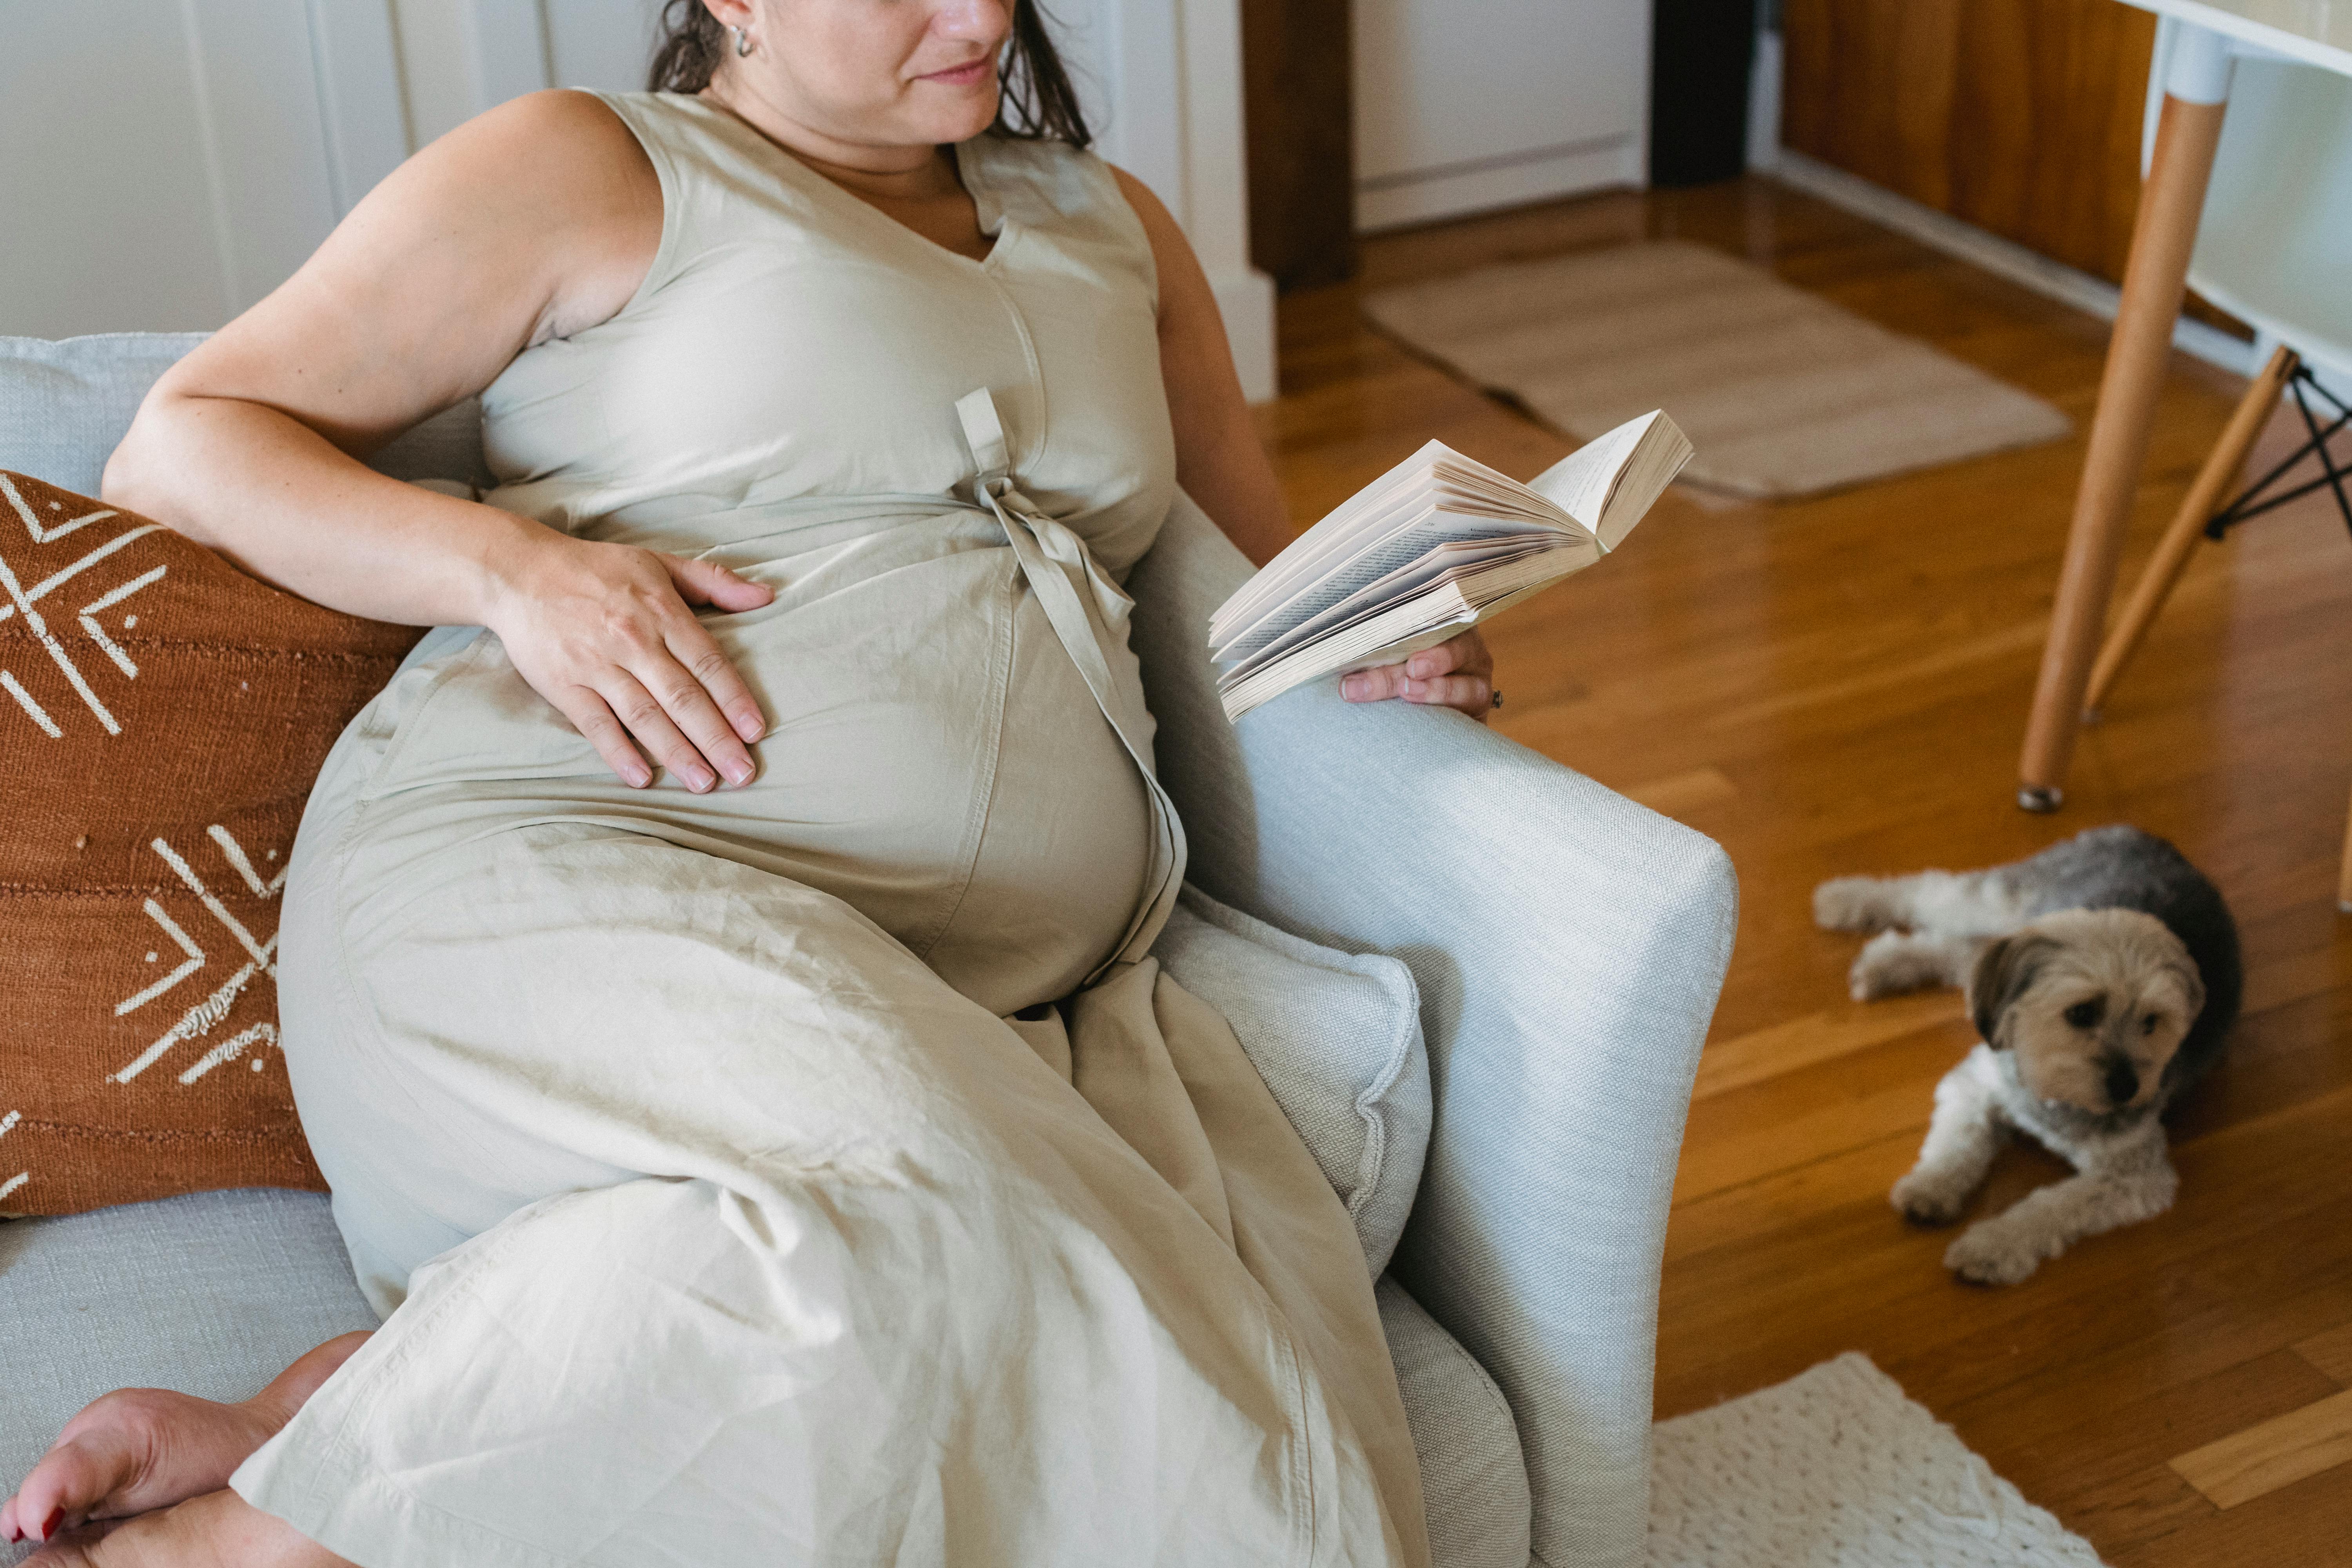 A pregnant woman reading a book | Source: Pexels